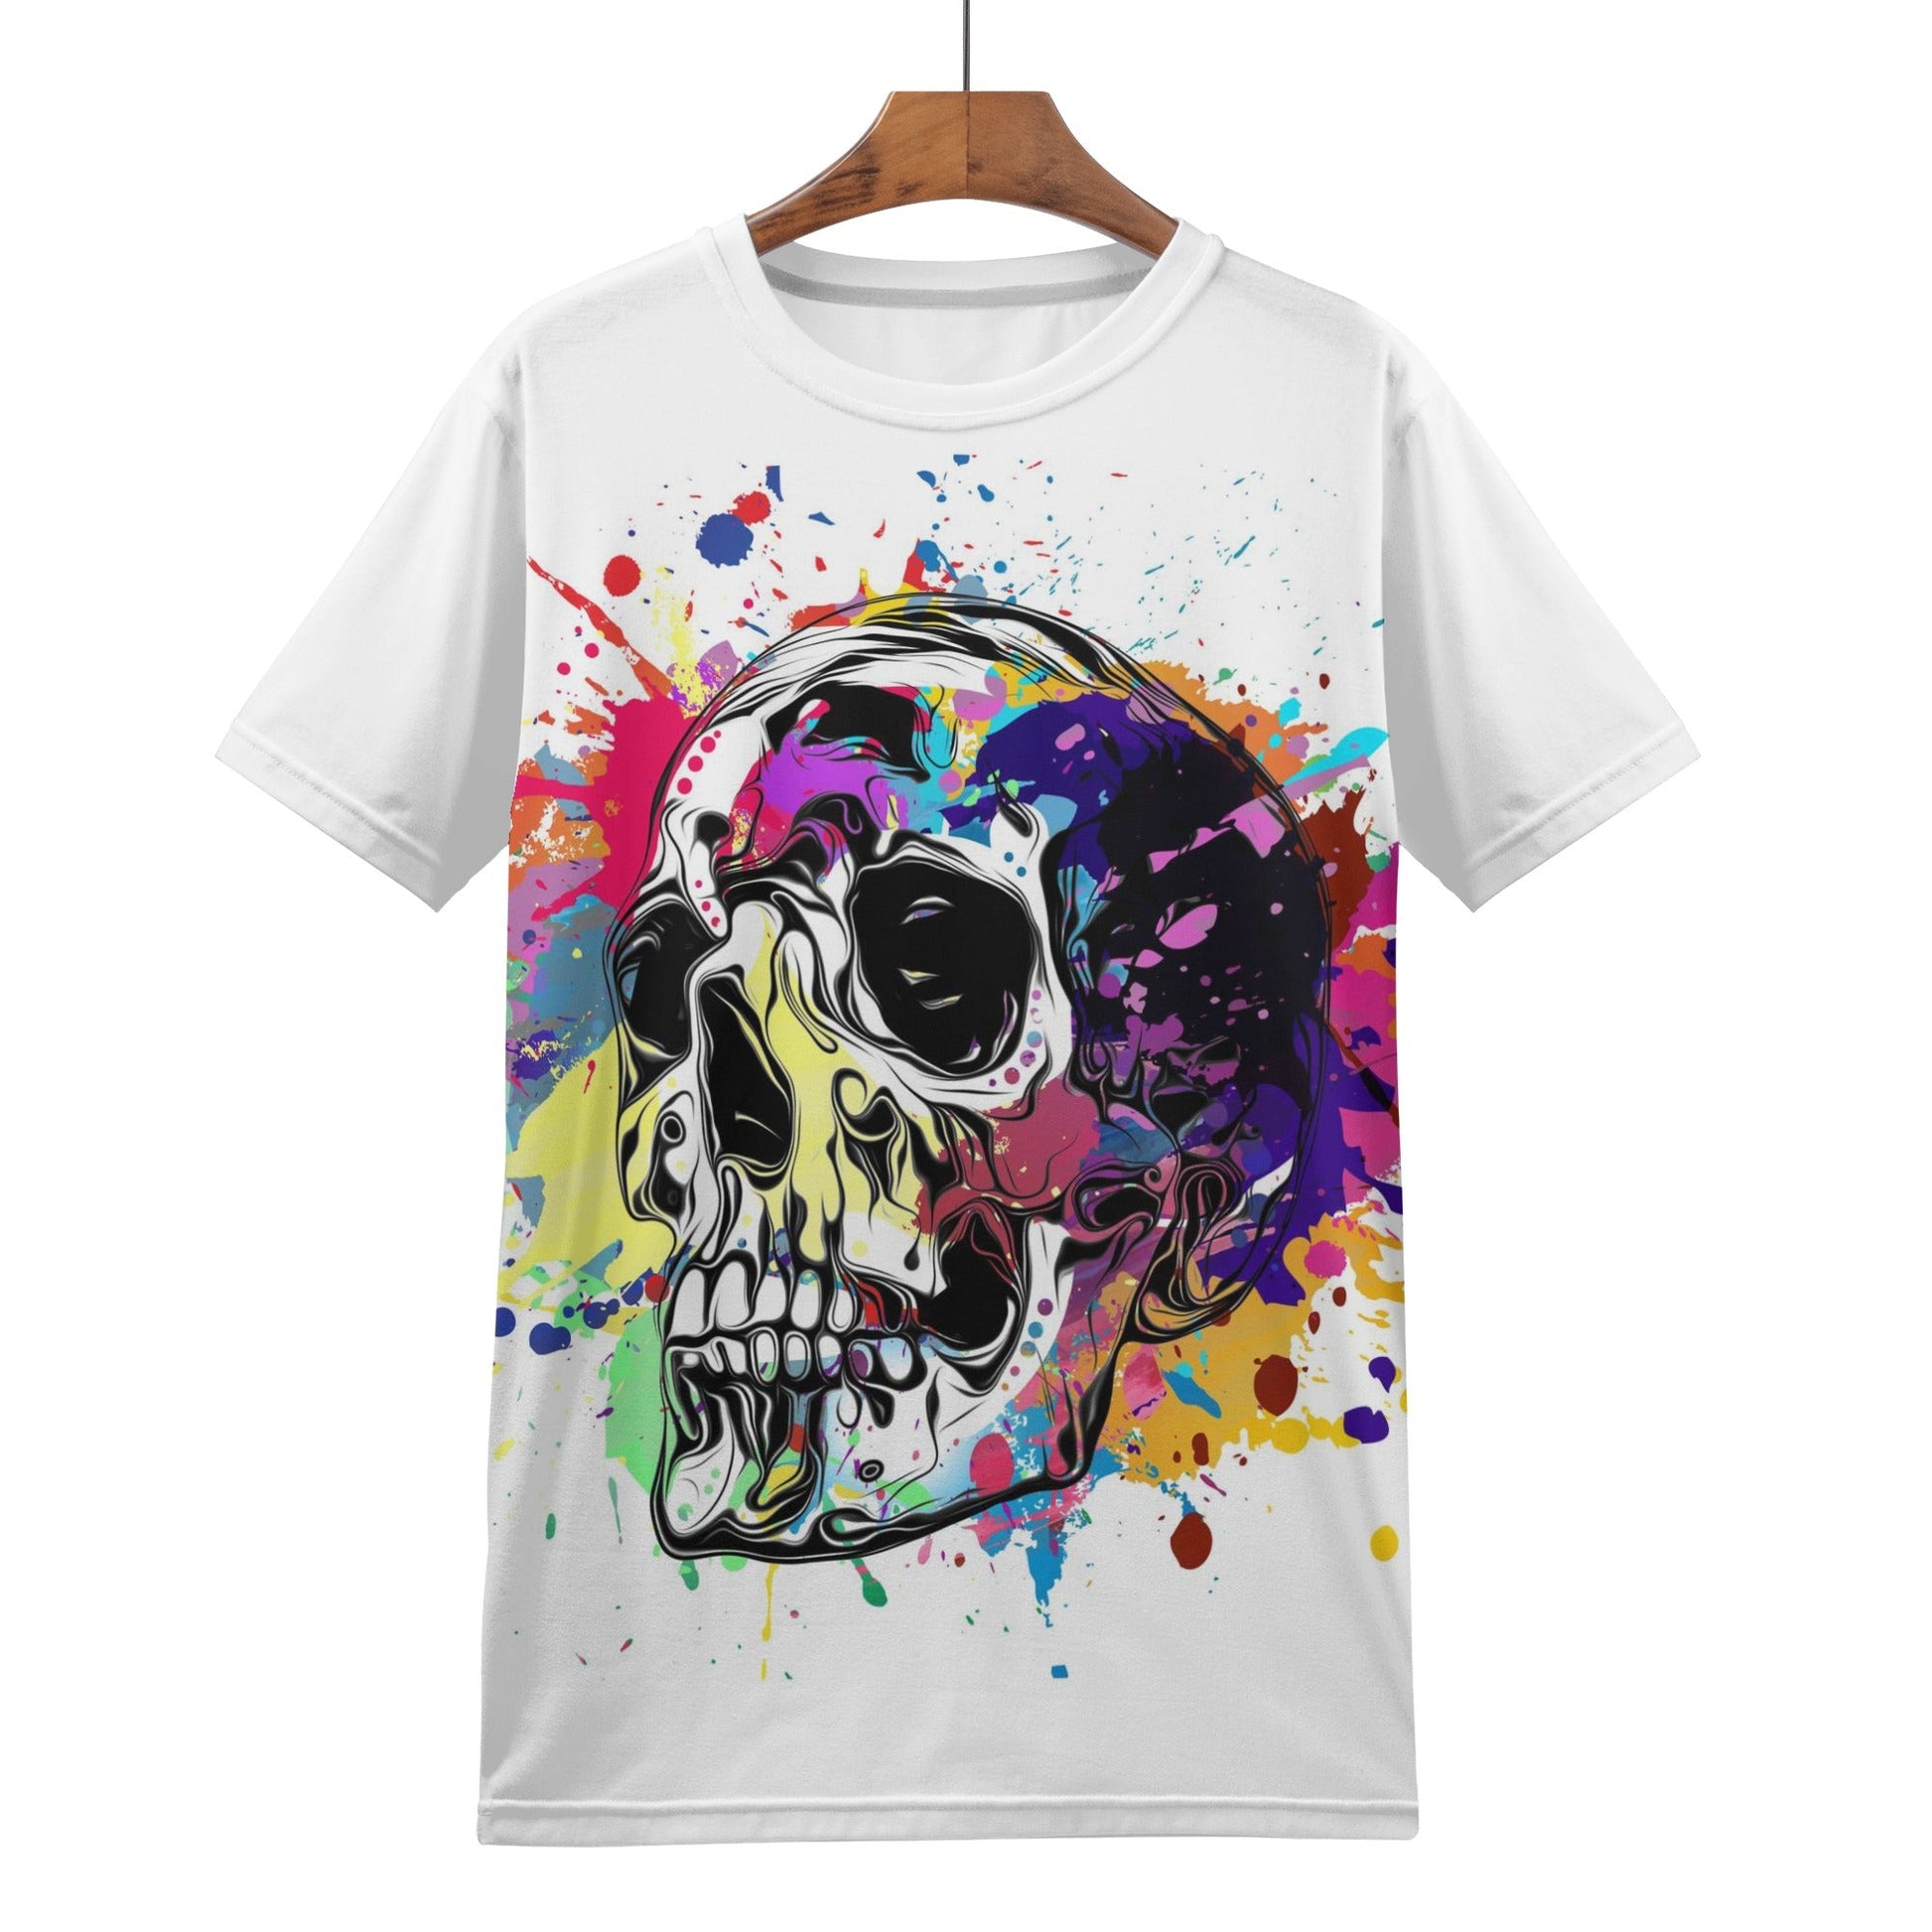 T4x Men's Skull T-shirt - T4x Quadruple Love